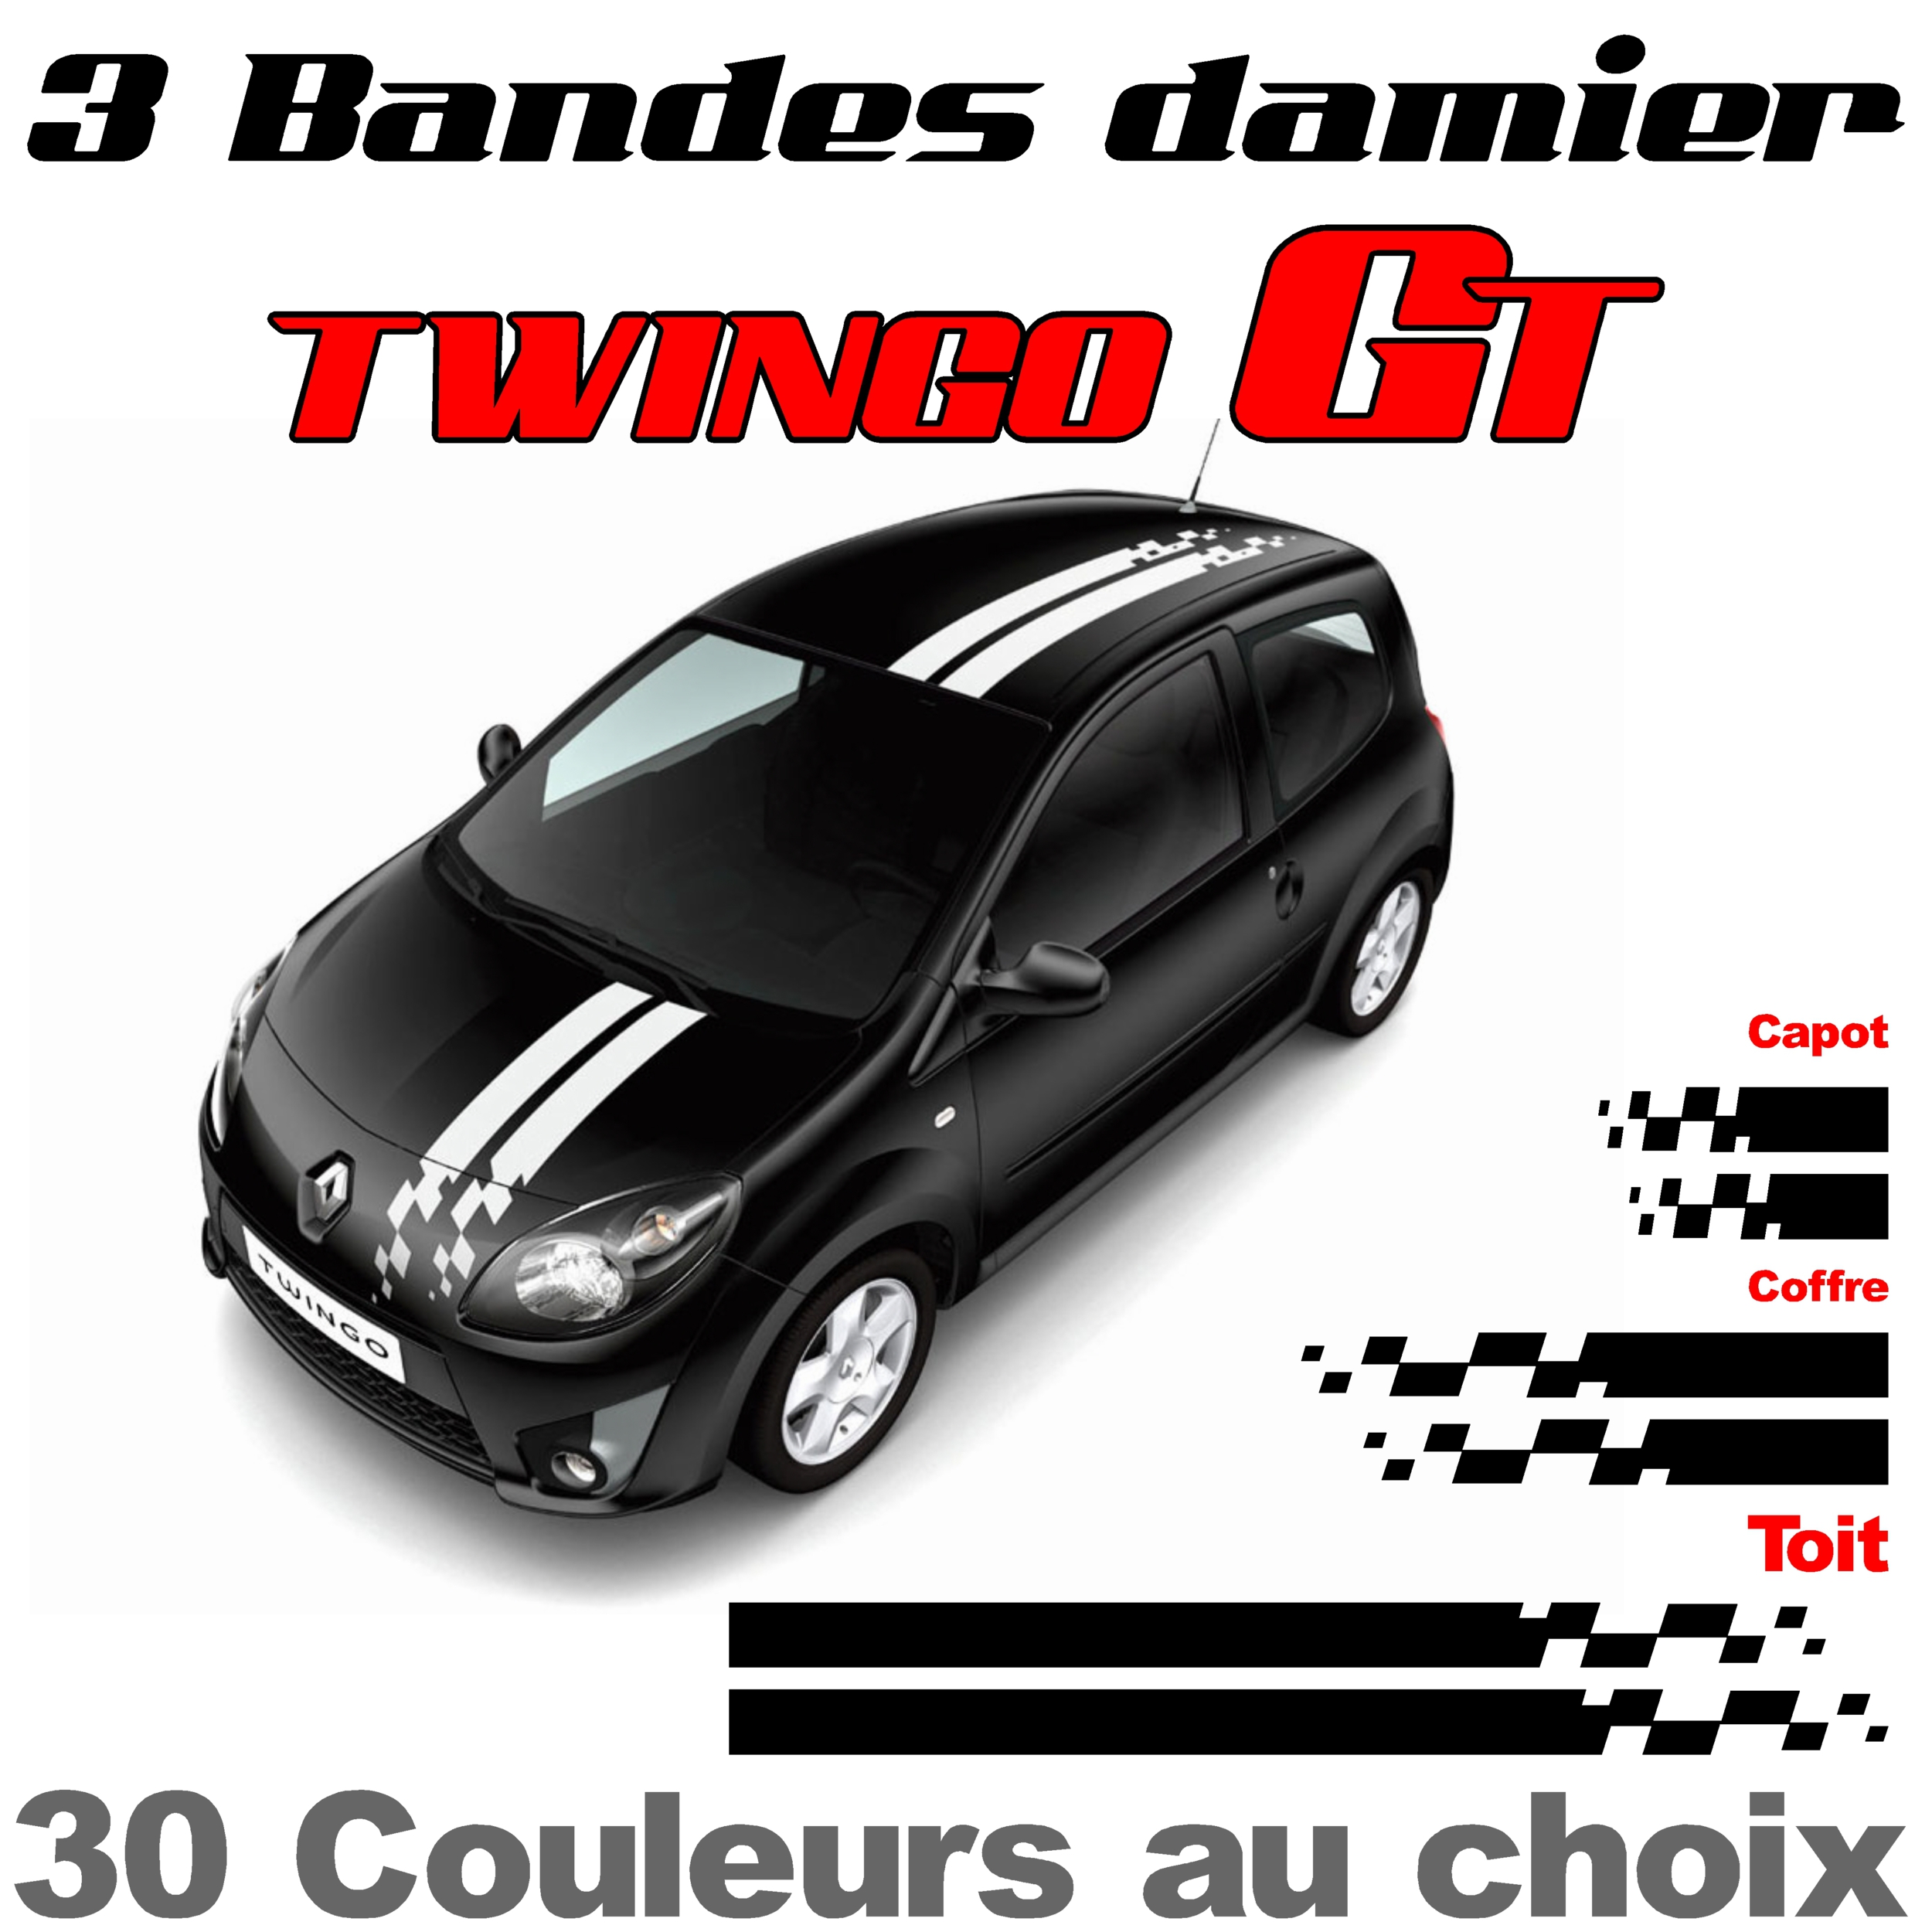 https://media.cdnws.com/_i/60118/1328/3177/31/stickers-ref134b-bande-damier-twingo-gt-renault-sport-tuning-rallye-megane-clio4-c4-scenic-competision-deco-adhesive-autocollant.jpeg